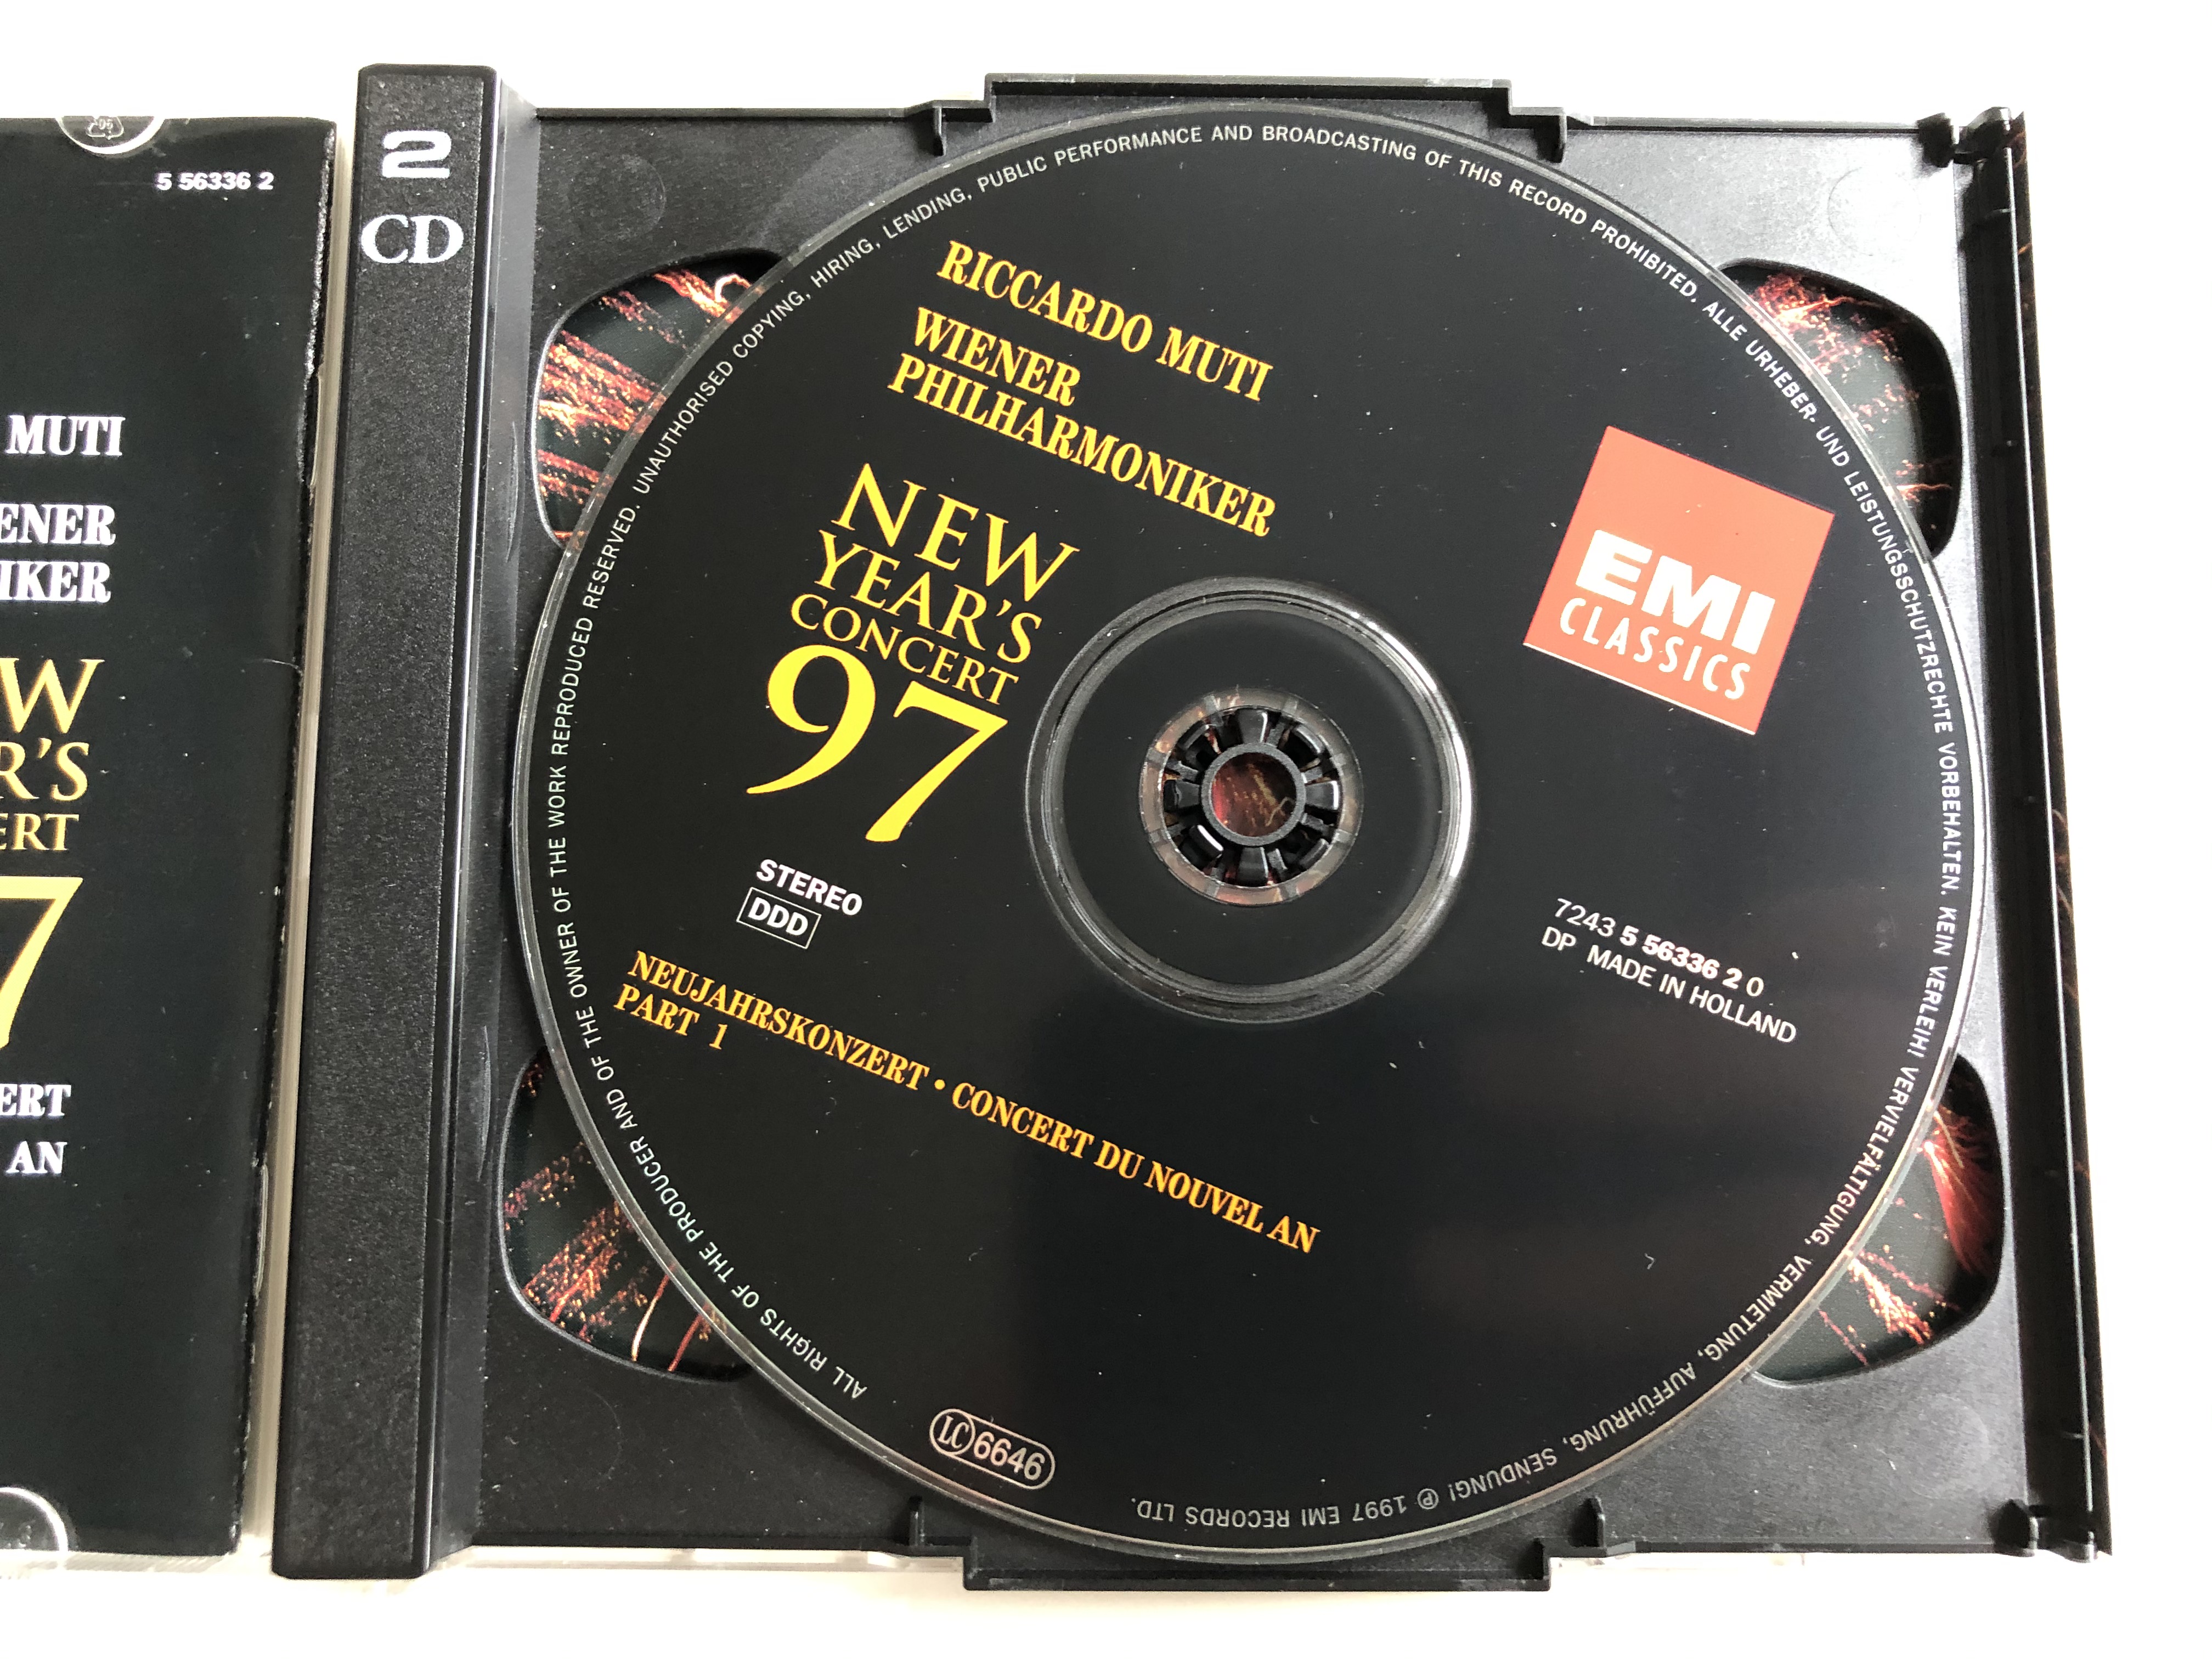 riccardo-muti-wiener-philharmoniker-new-year-s-concert-97-neujahrskonzert-concert-du-nouvel-an-emi-1897-1997-100-years-of-great-music-emi-classics-2x-audio-cd-1997-stereo-7243-5-56336-2-6-.jpg